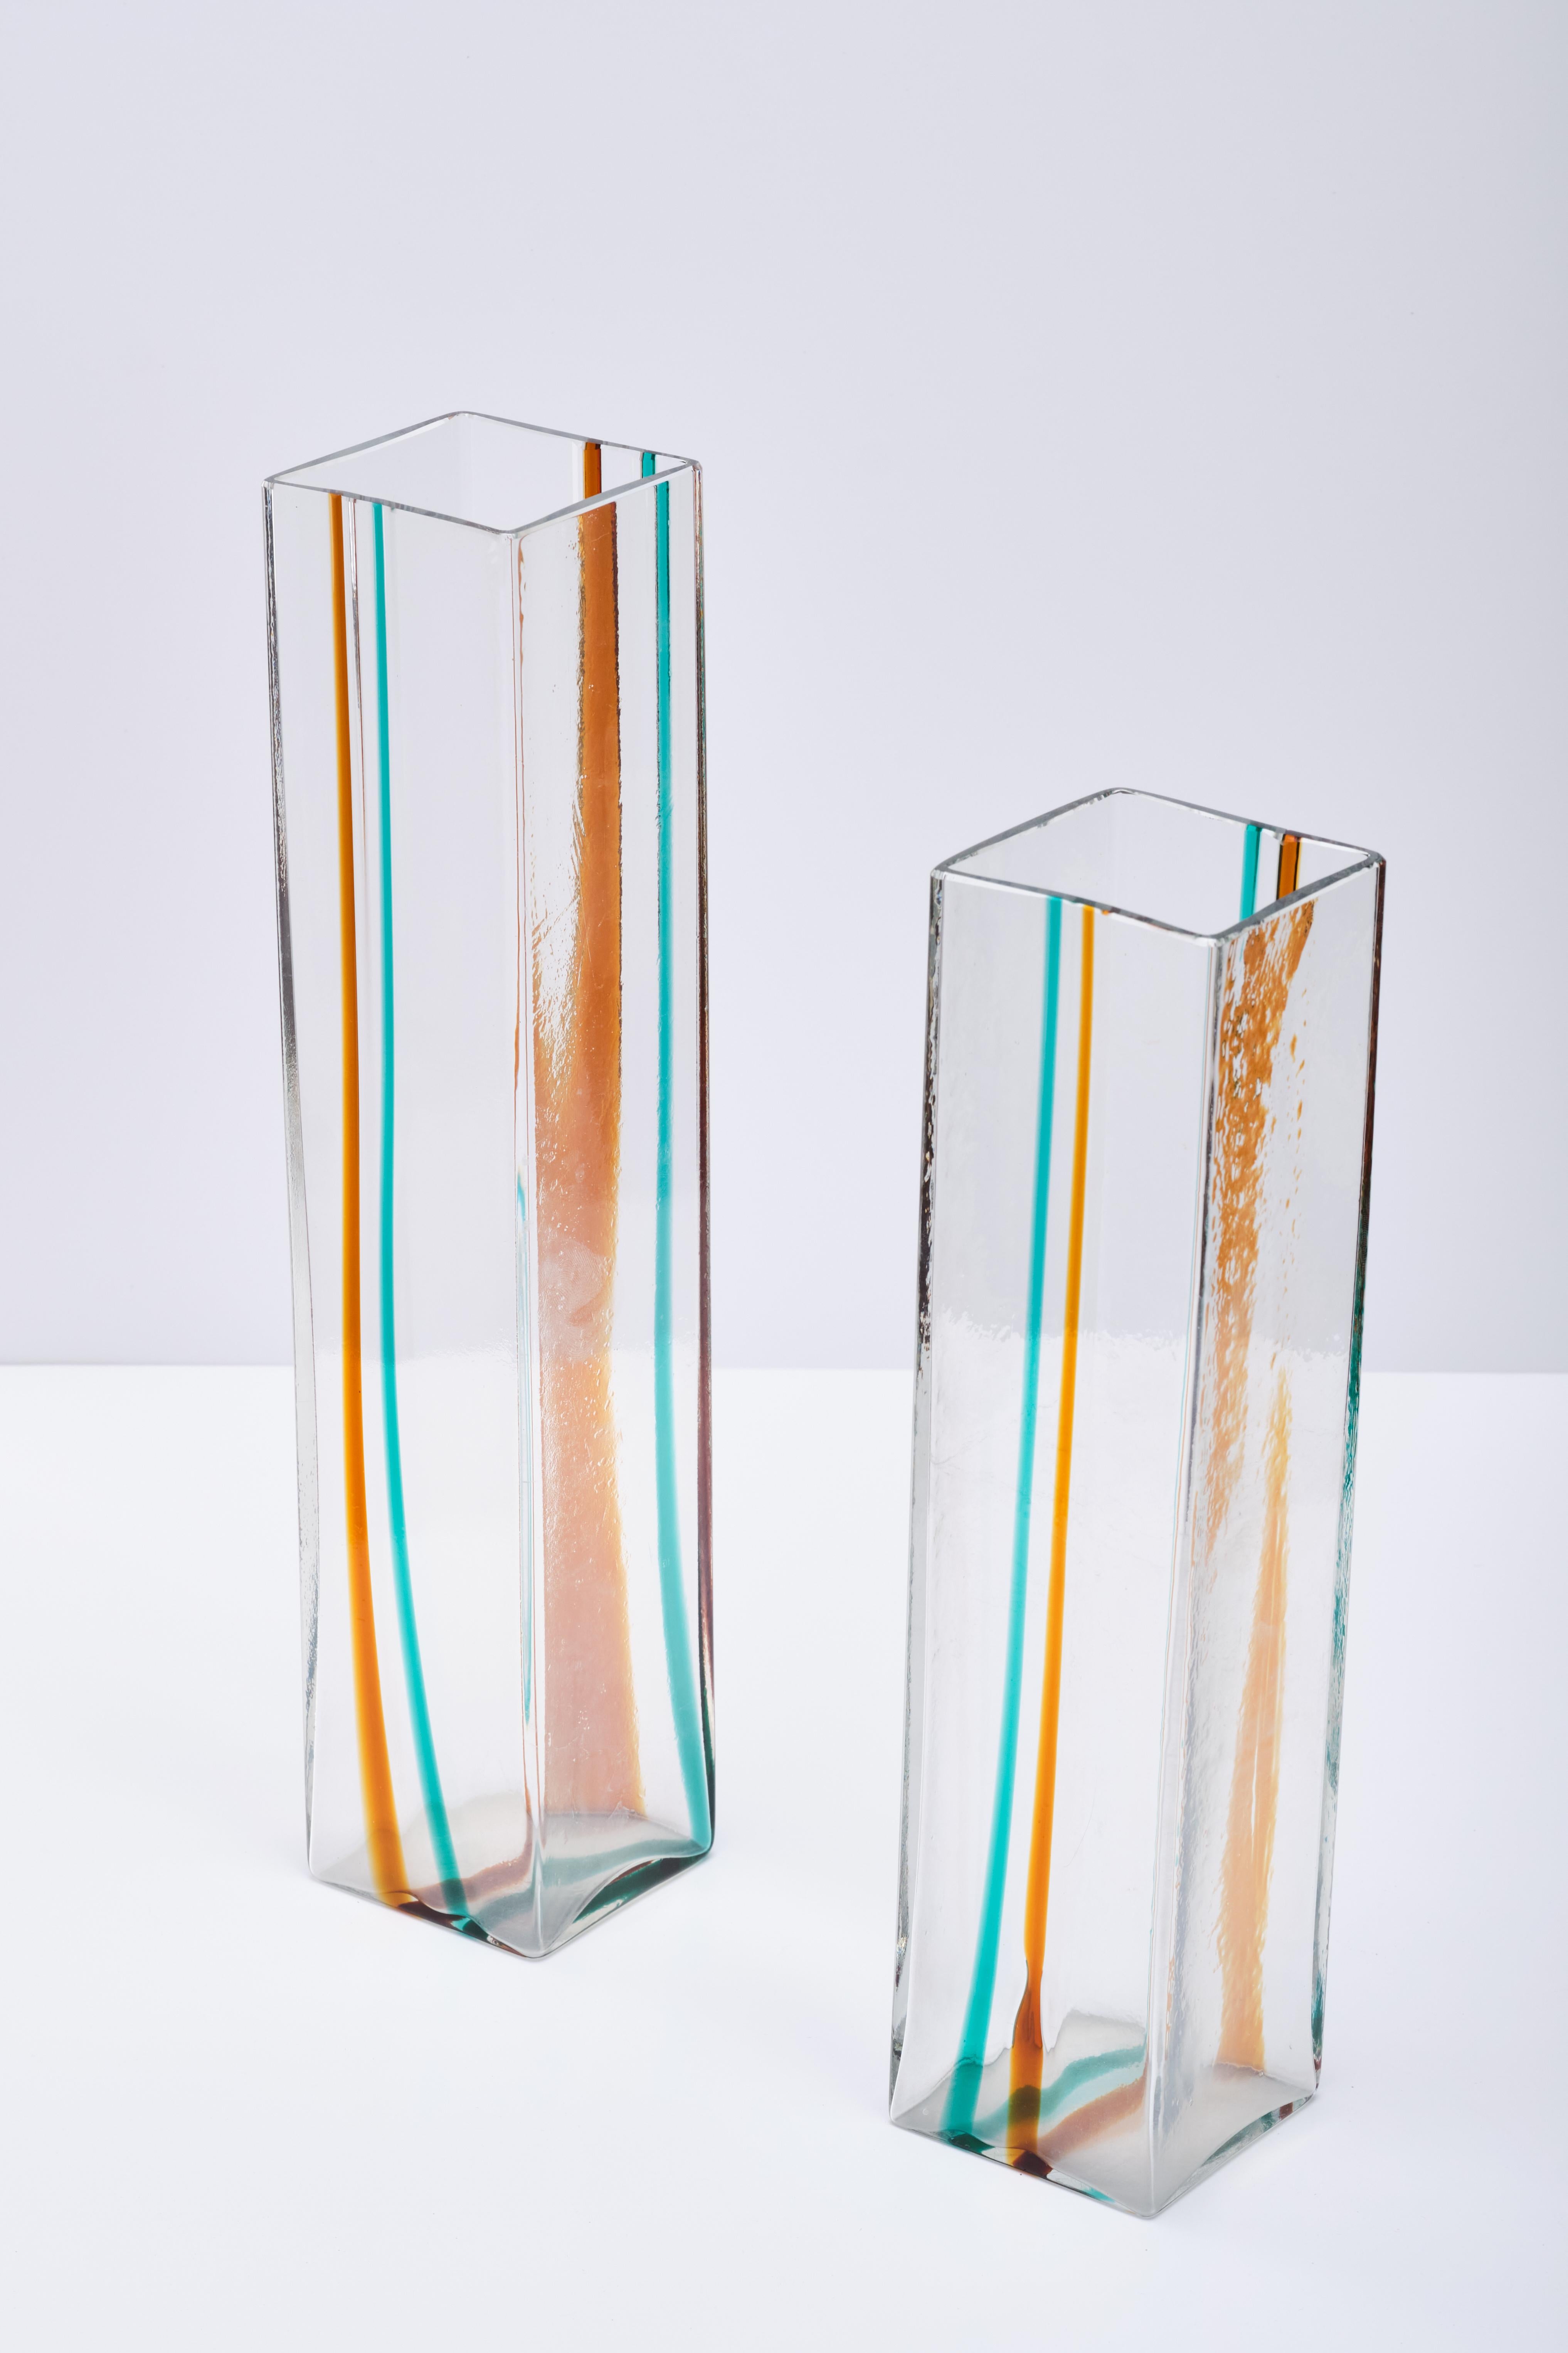 Two Venini vases mold blown glass with decoration on the band in colored glass. Signed in Venini Italia acid. Produced by Venini, Italy, around 1970. 
Rare Laura de Santillana for Venini blown glass designed in the 1970s, signed Venini.  This